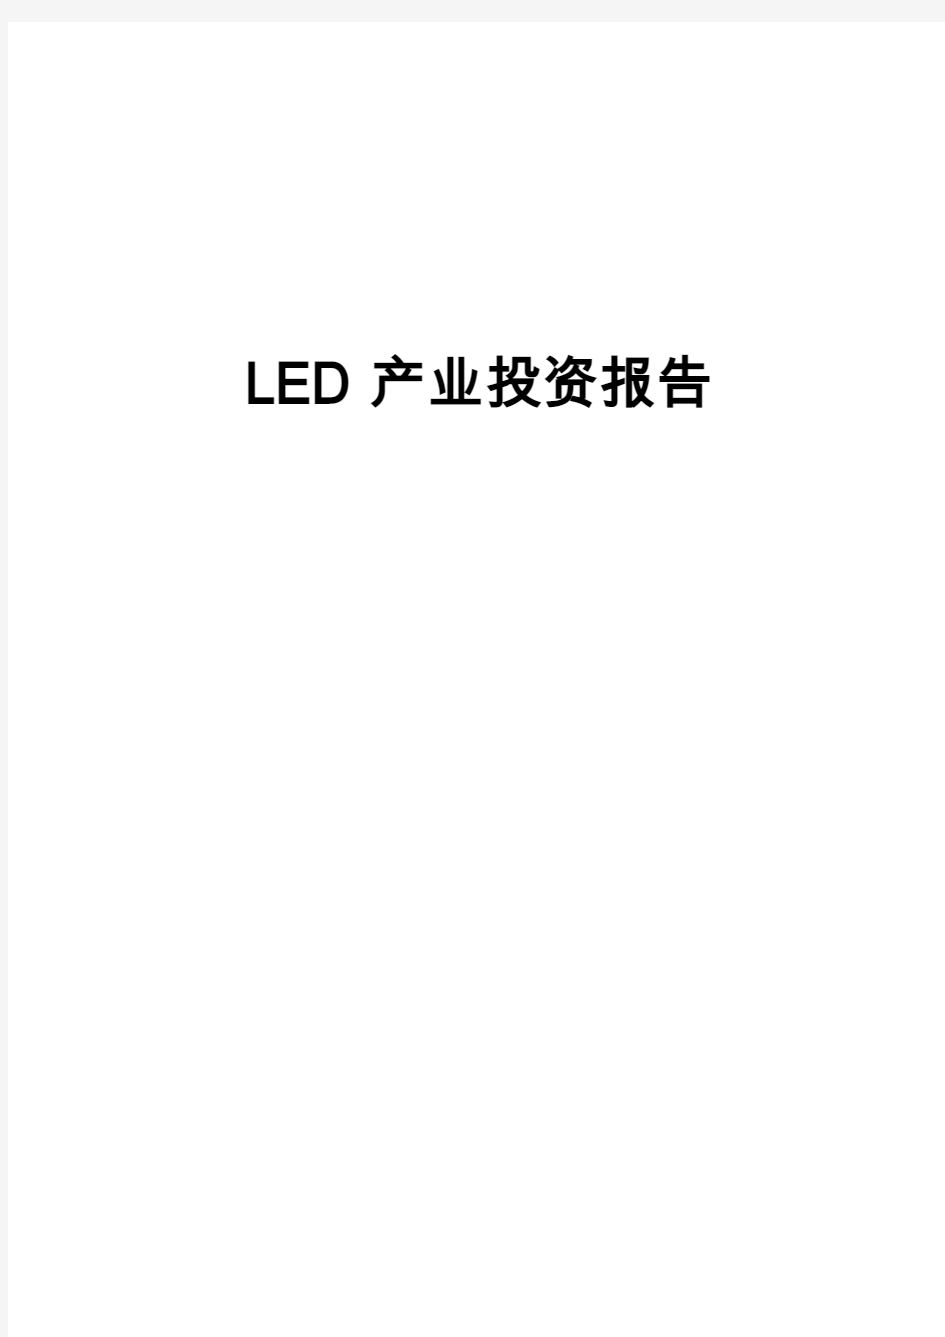 LED产业投资规划 - 复制